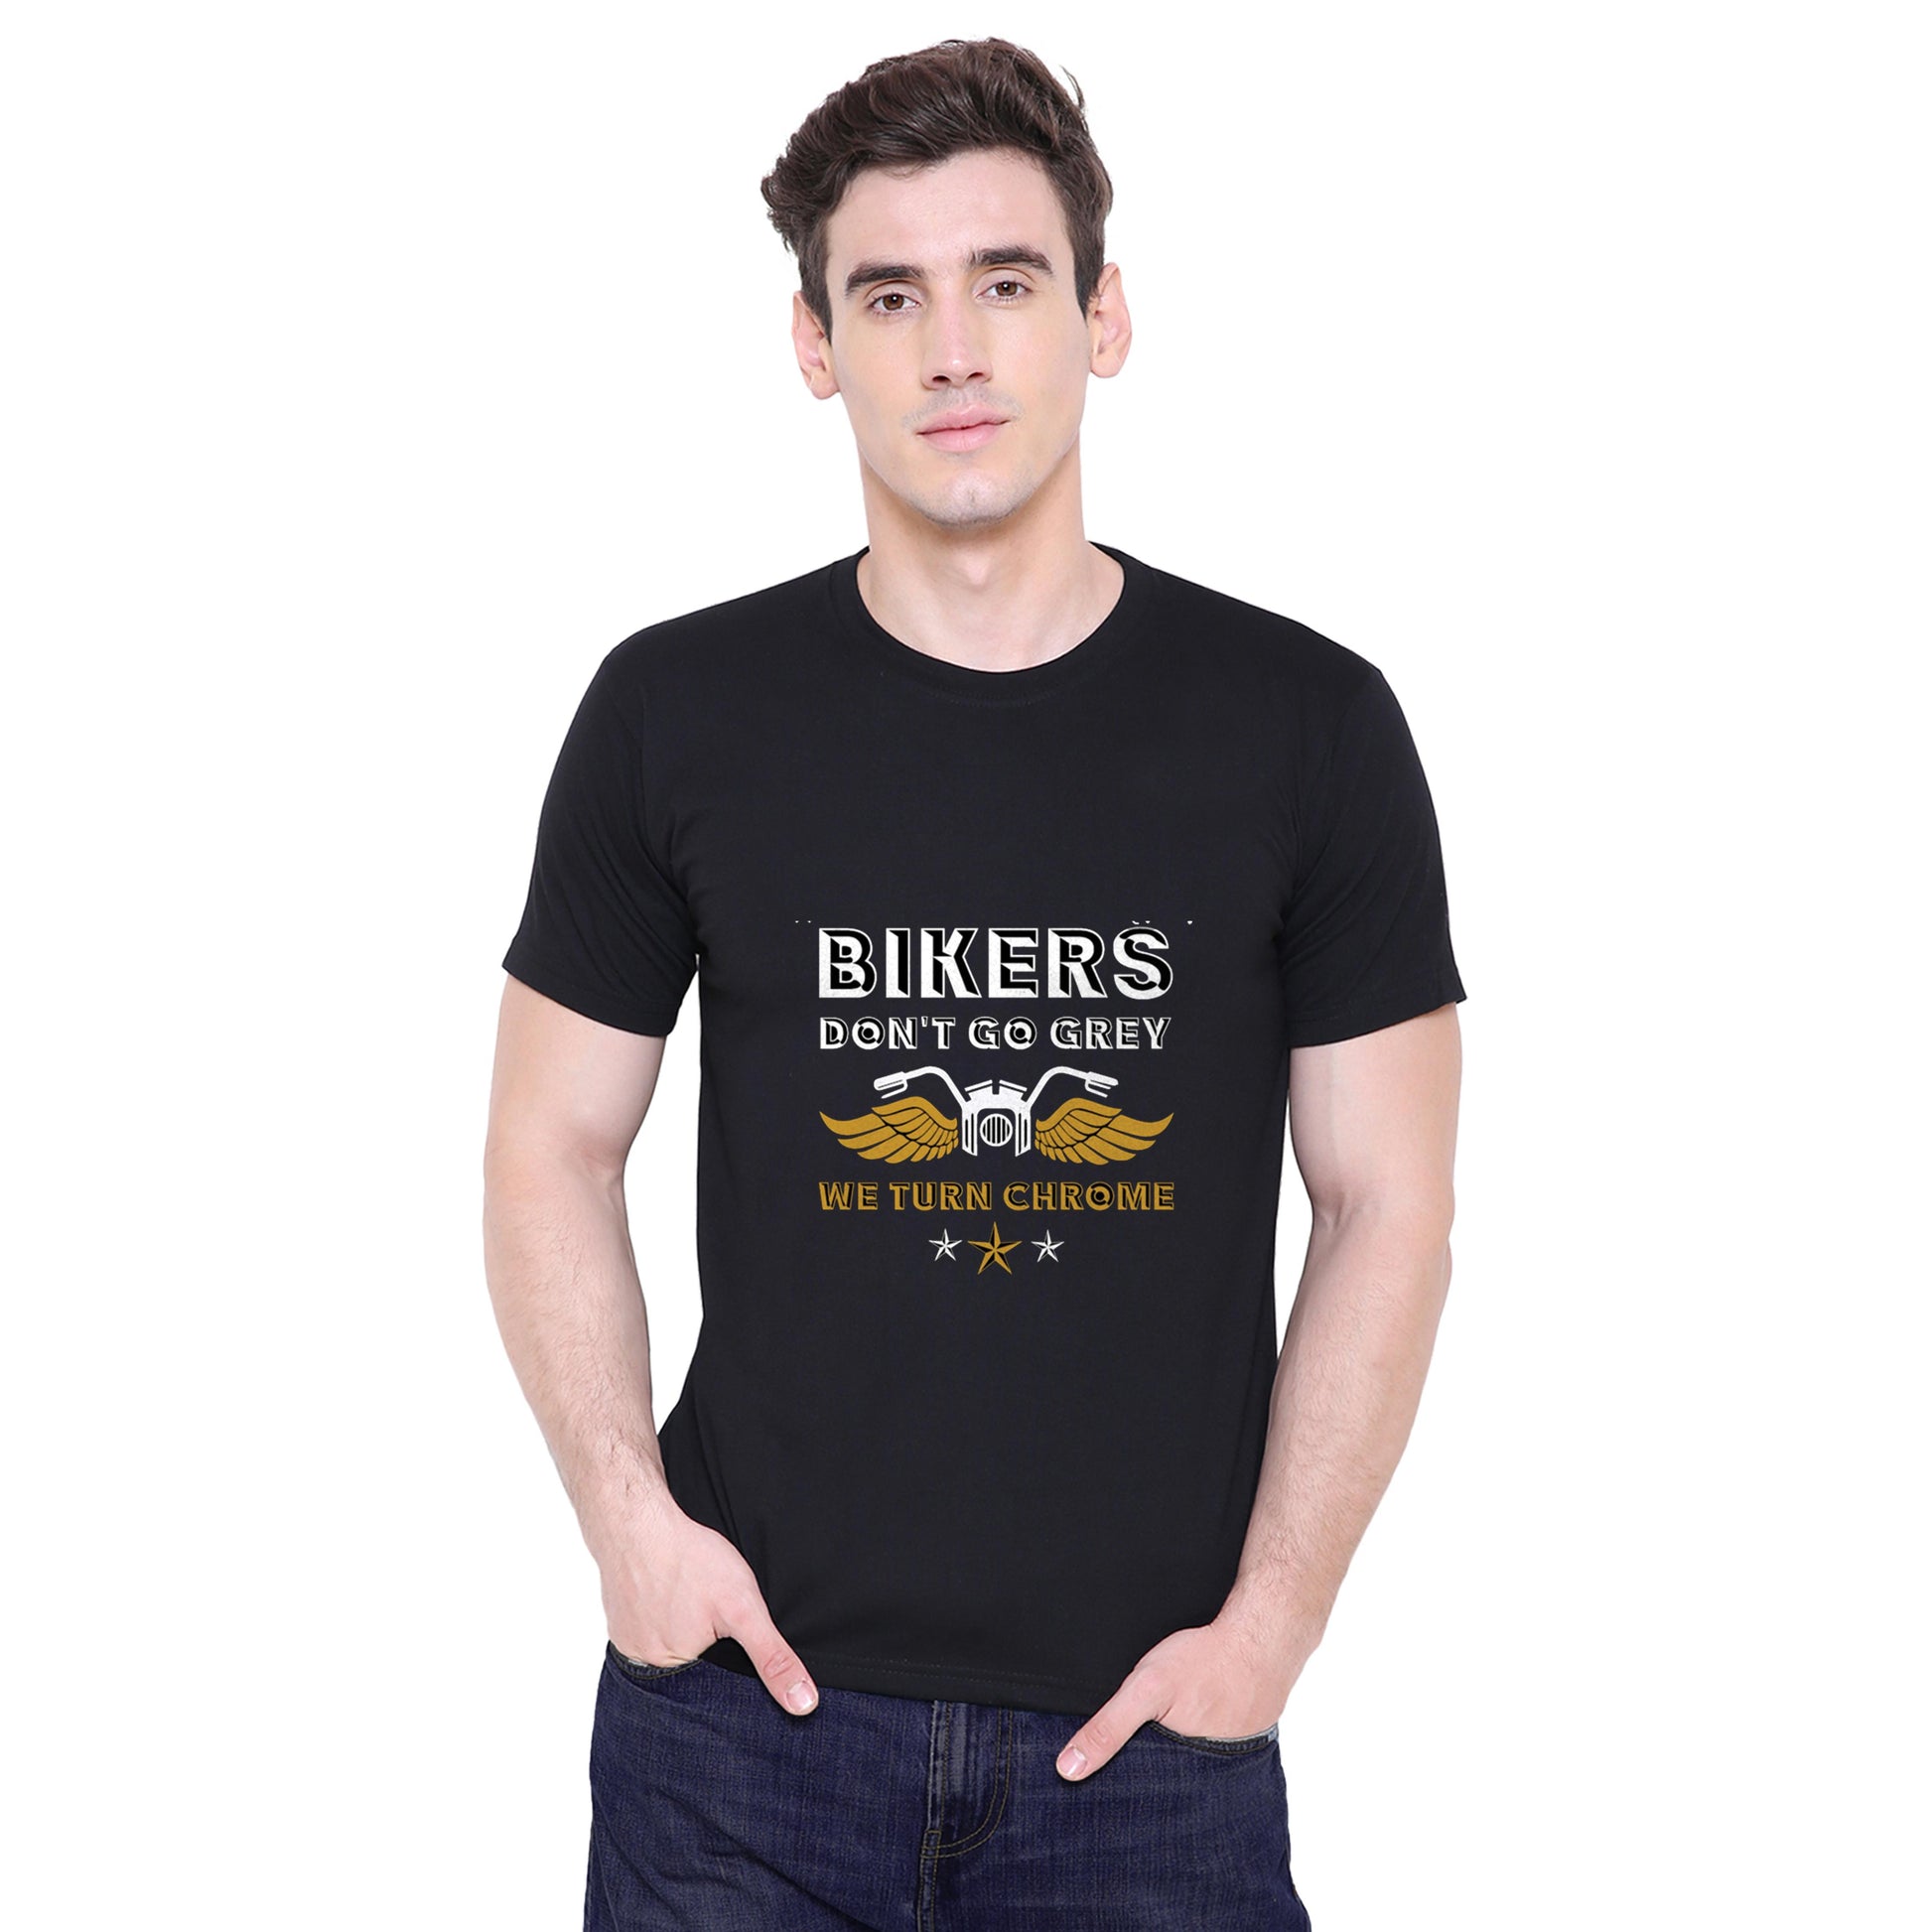 Bikers don't go grey, we turn chrome 3 quote Biker t shirts -Black